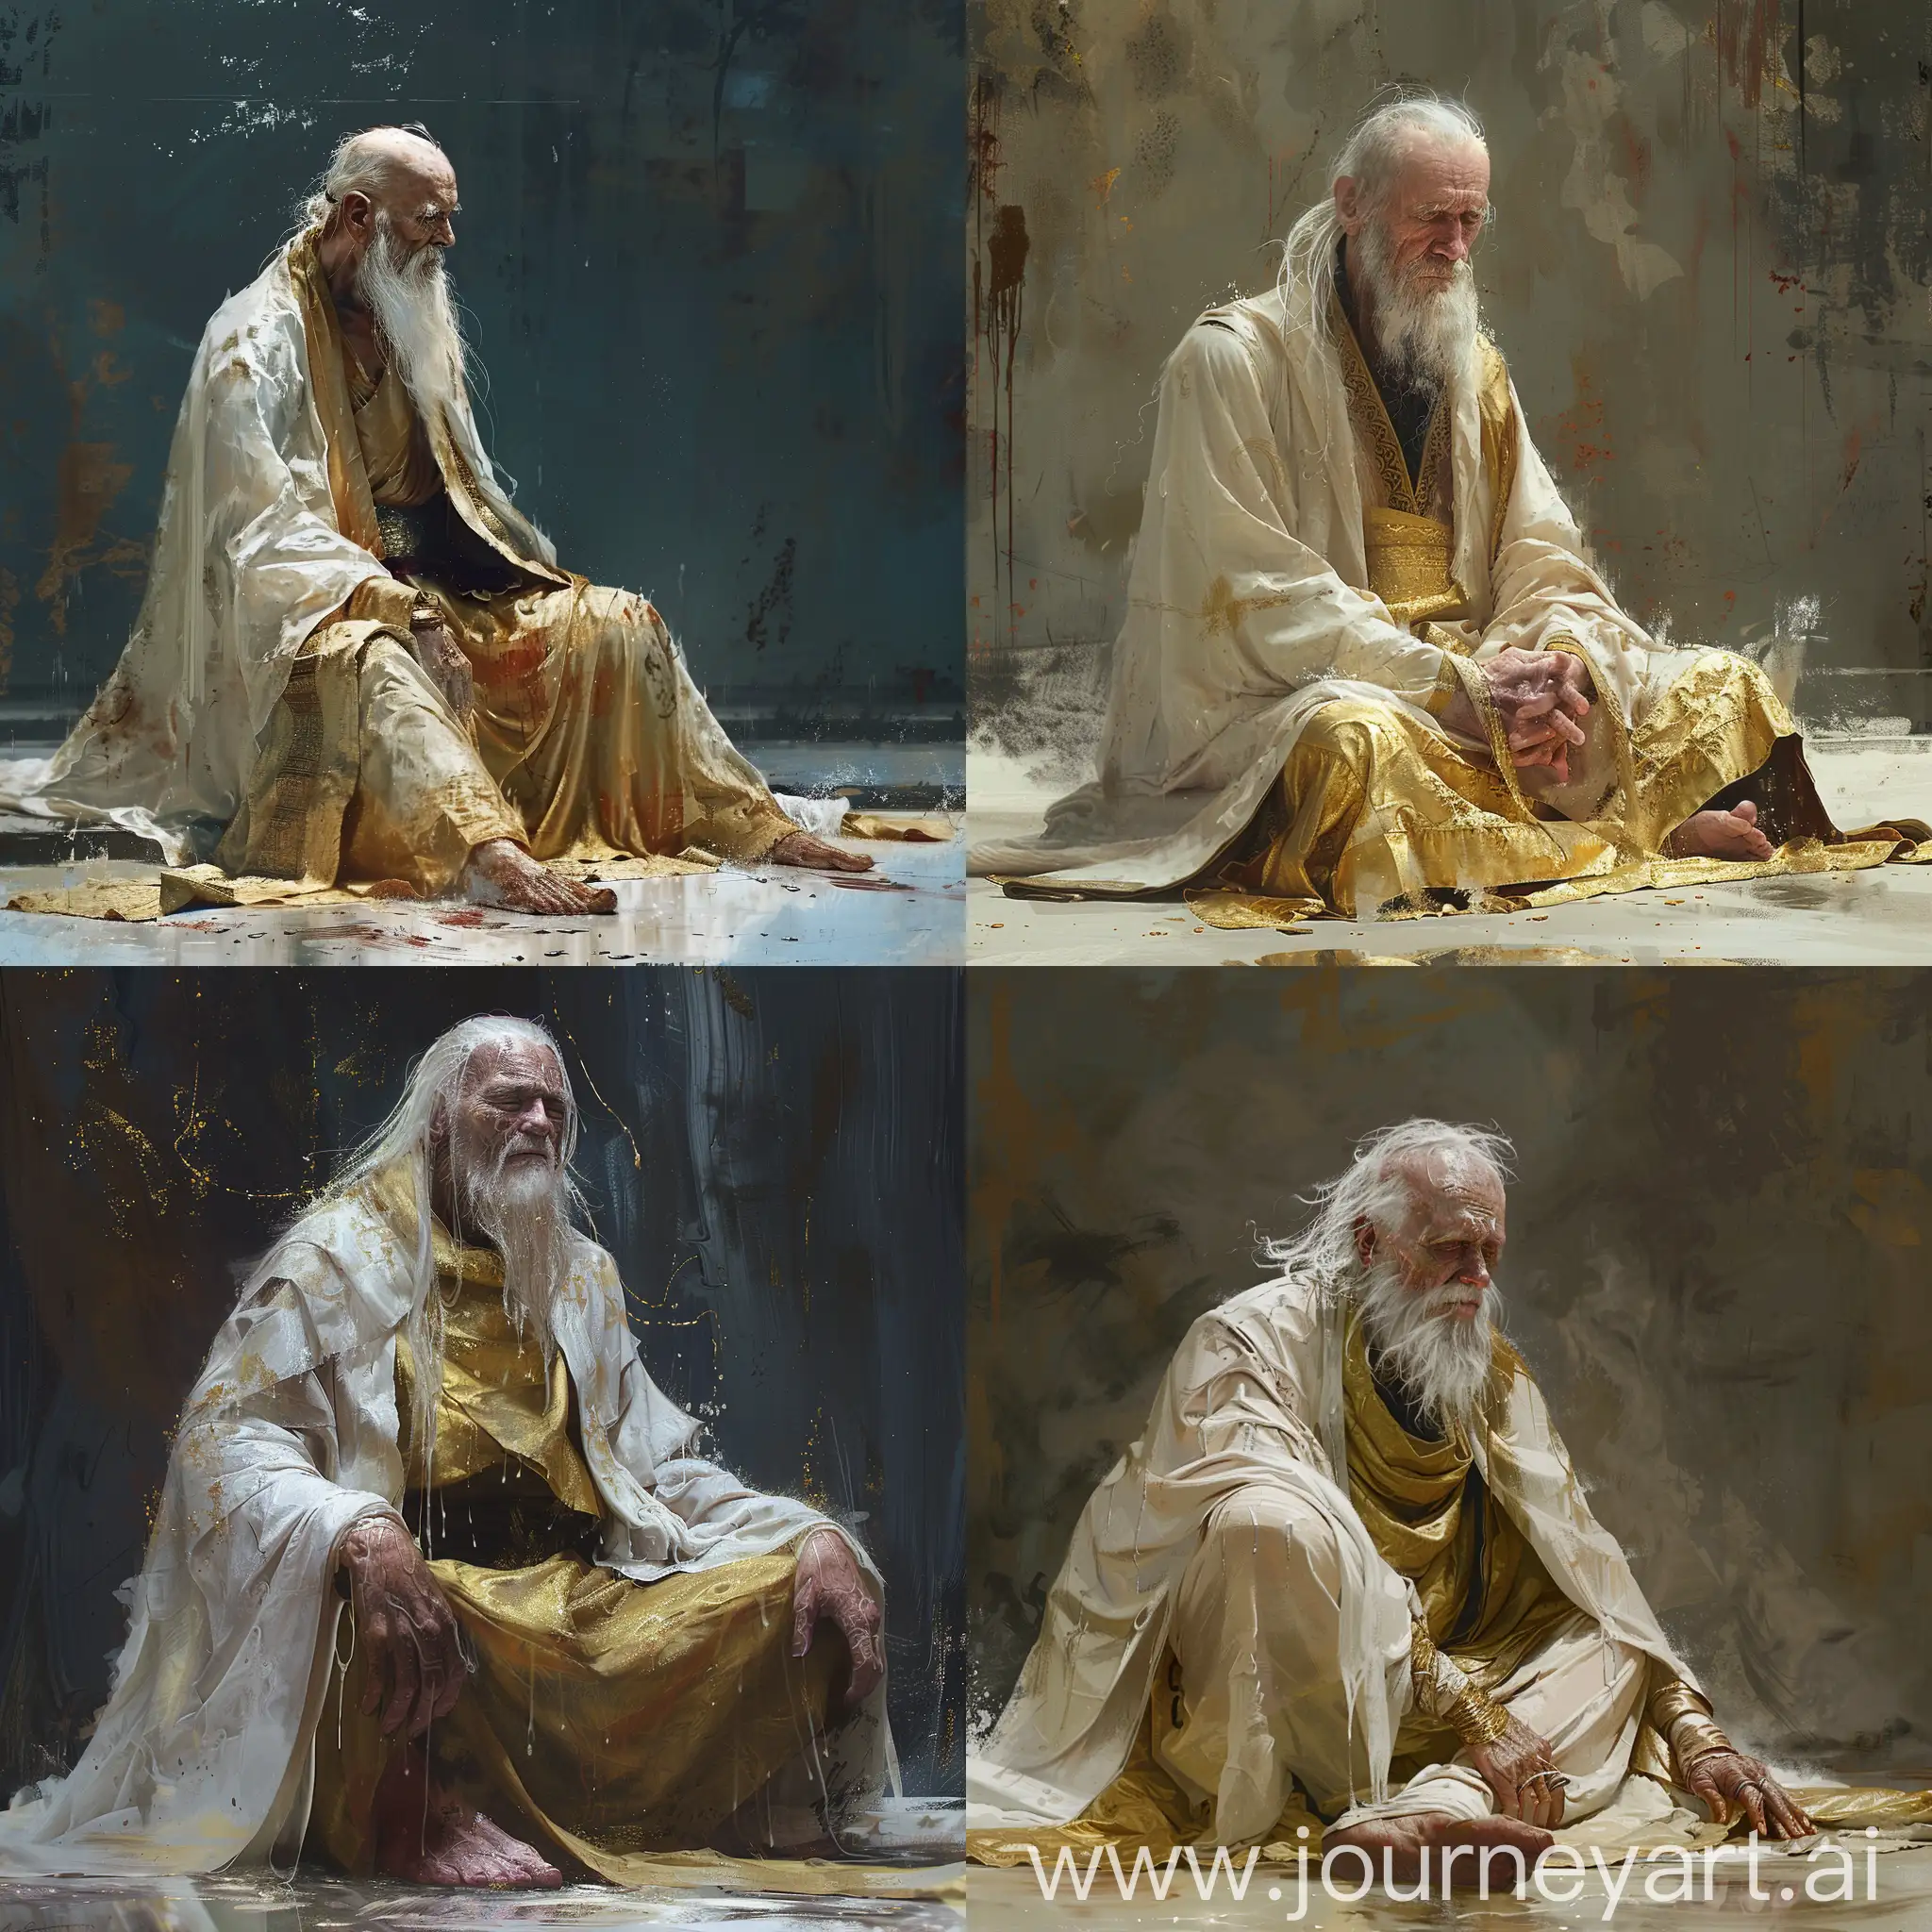 Fantasy-Monk-in-WhiteGold-Robe-Amidst-Rain